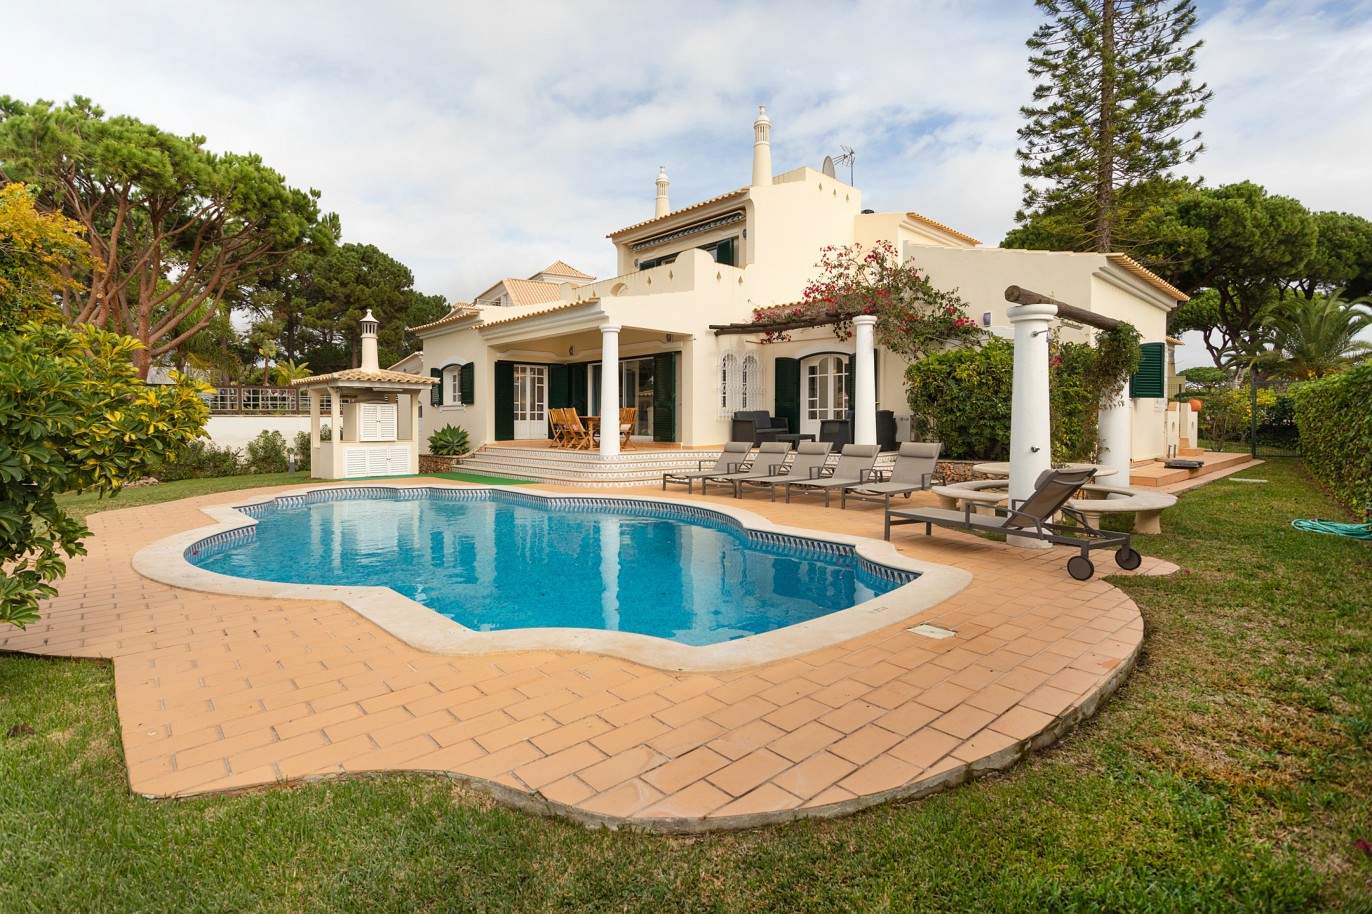 Moradia V5 com piscina, para venda em Vilamoura, Algarve_212567